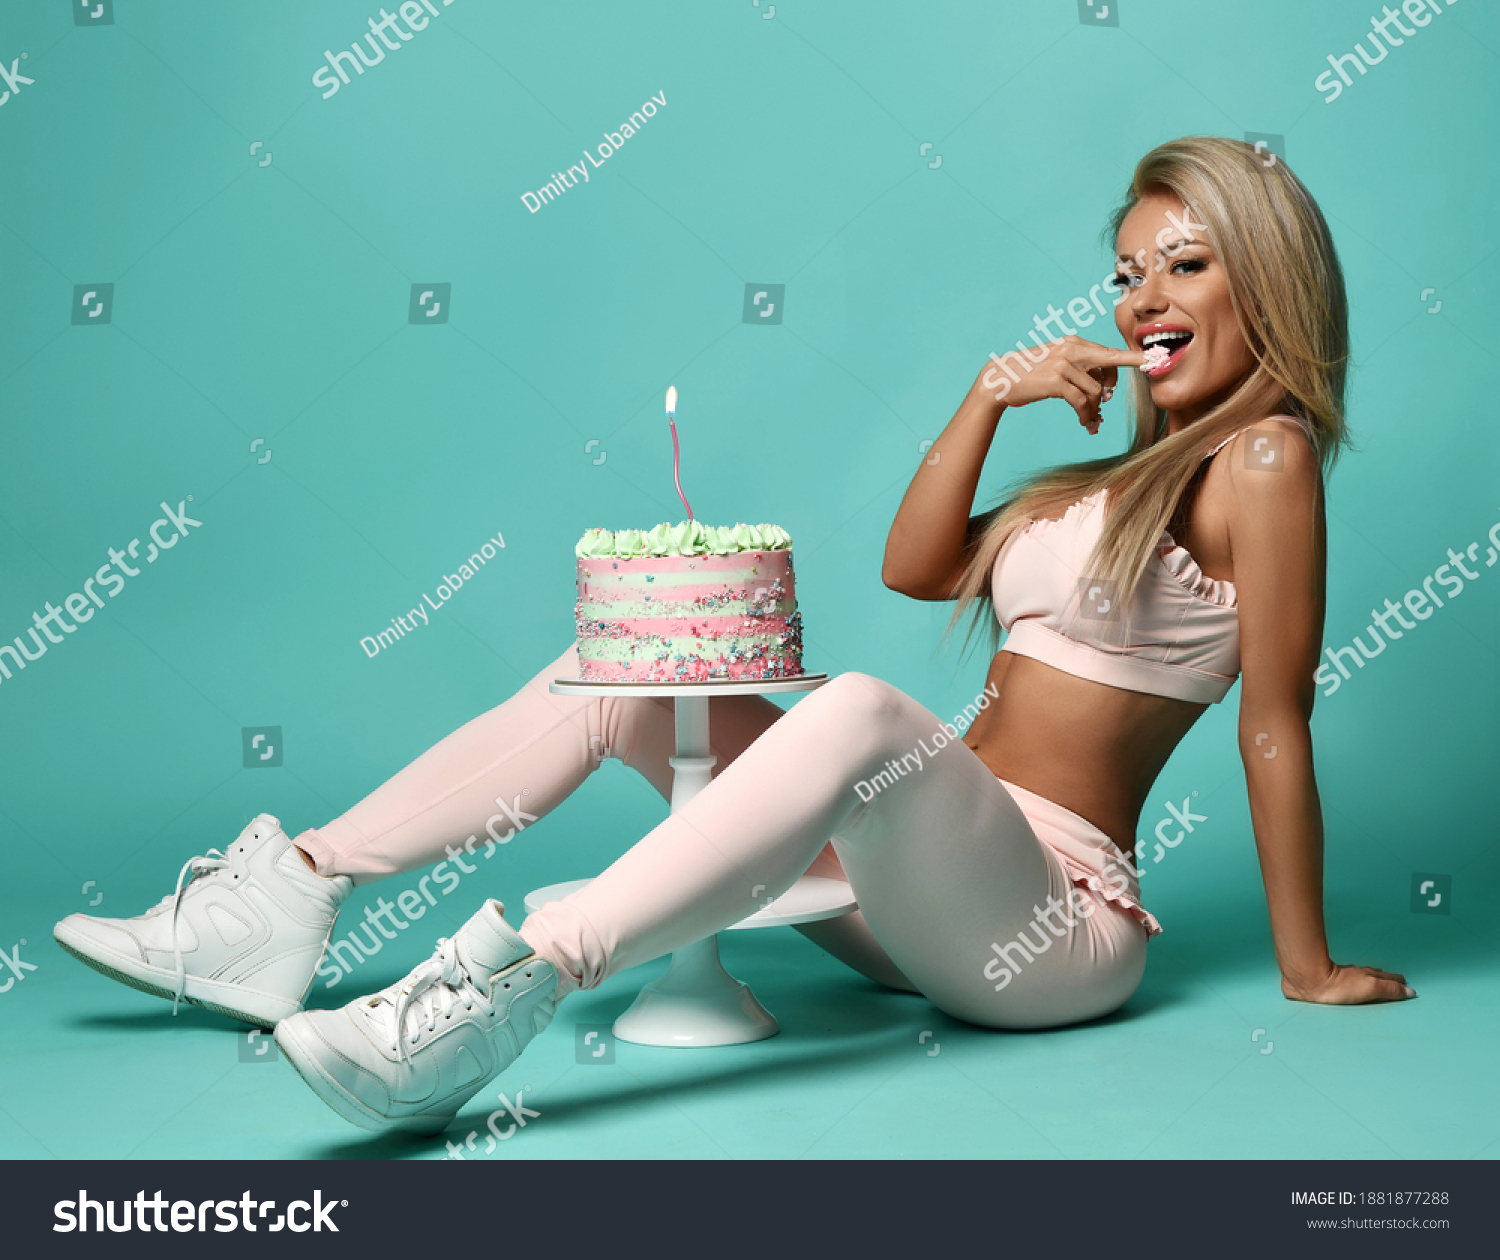 christina herbert share sexy female happy birthday photos